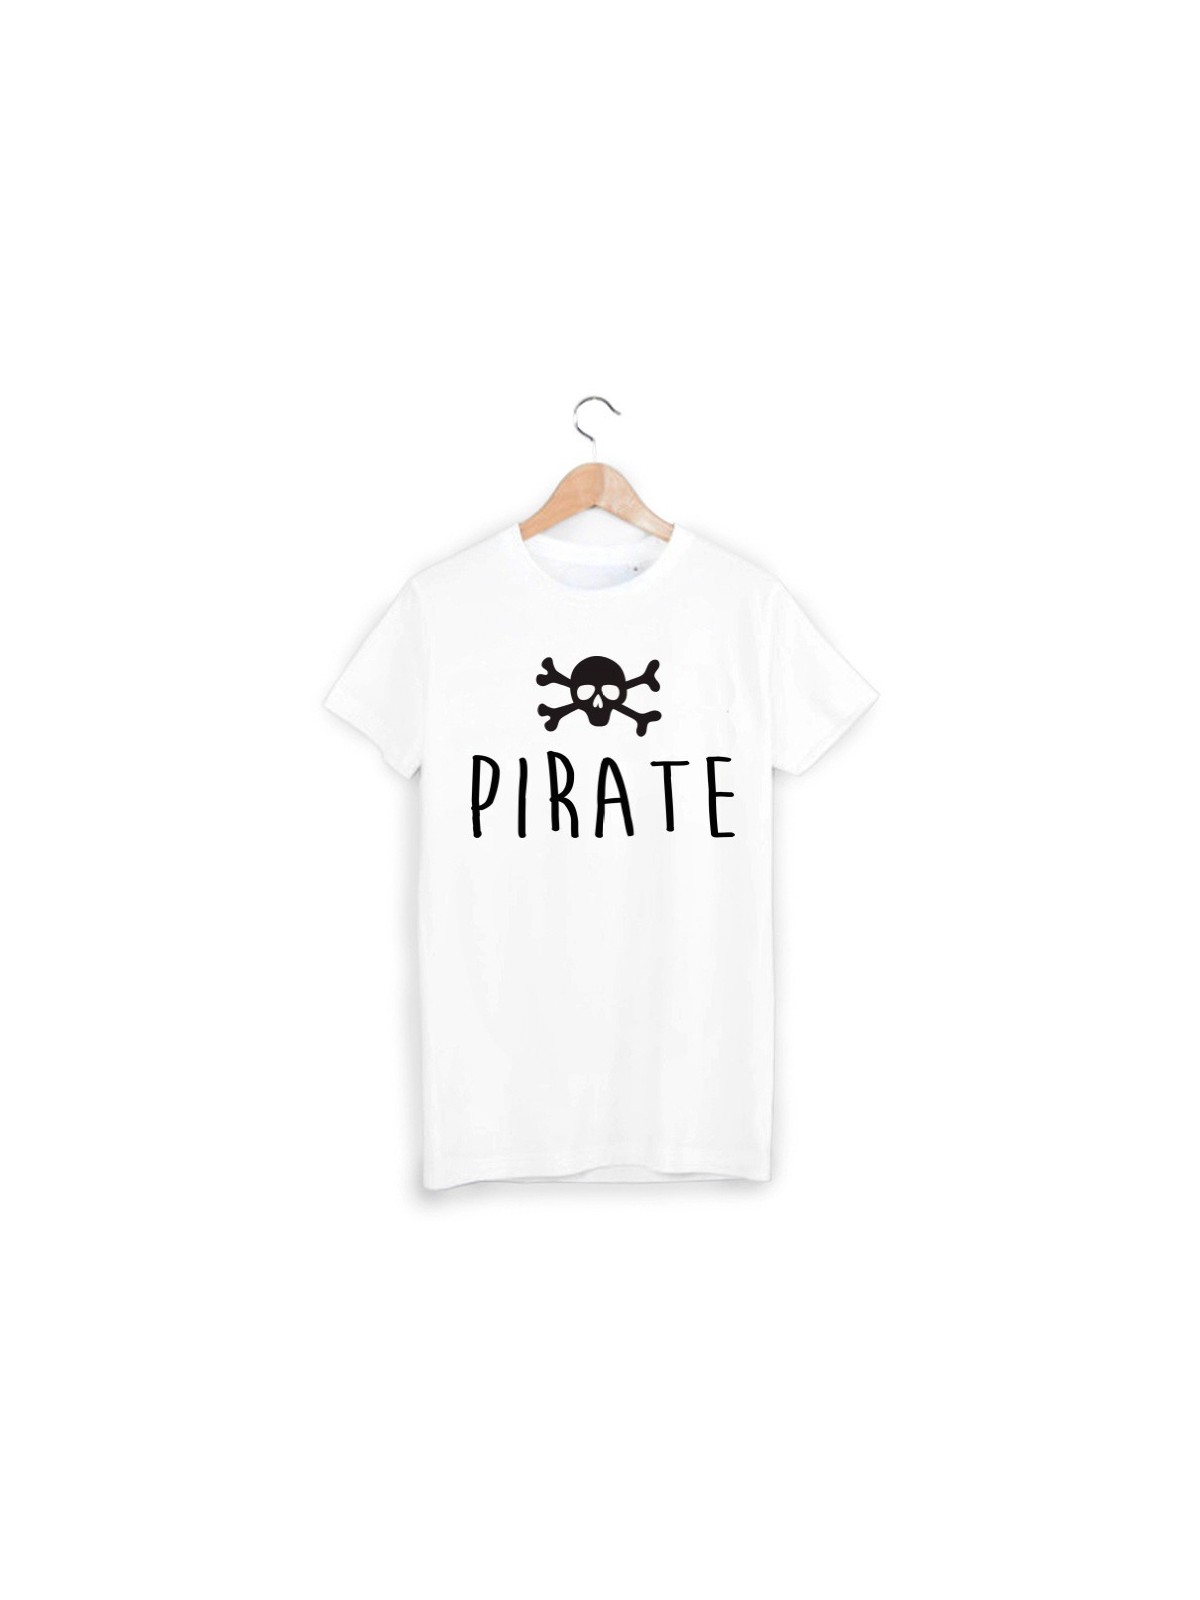 T-Shirt pirate ref 899